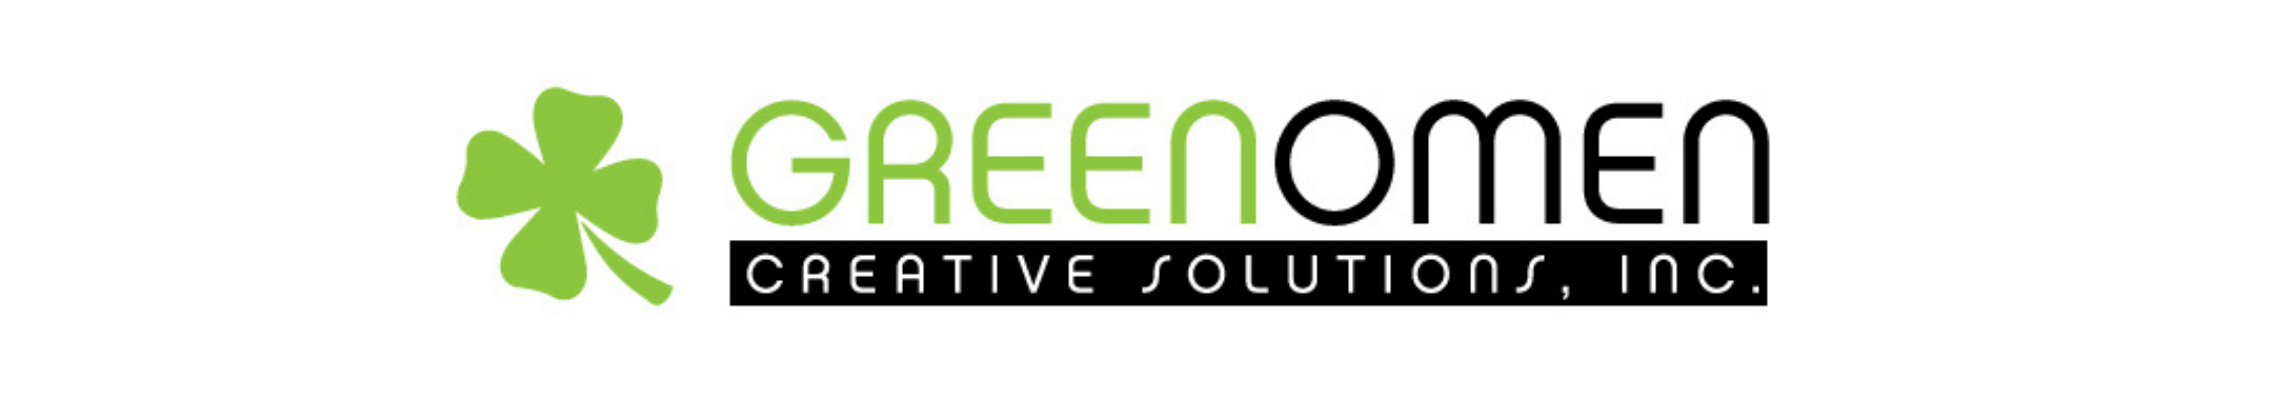 GreenOmen Creative Solutions